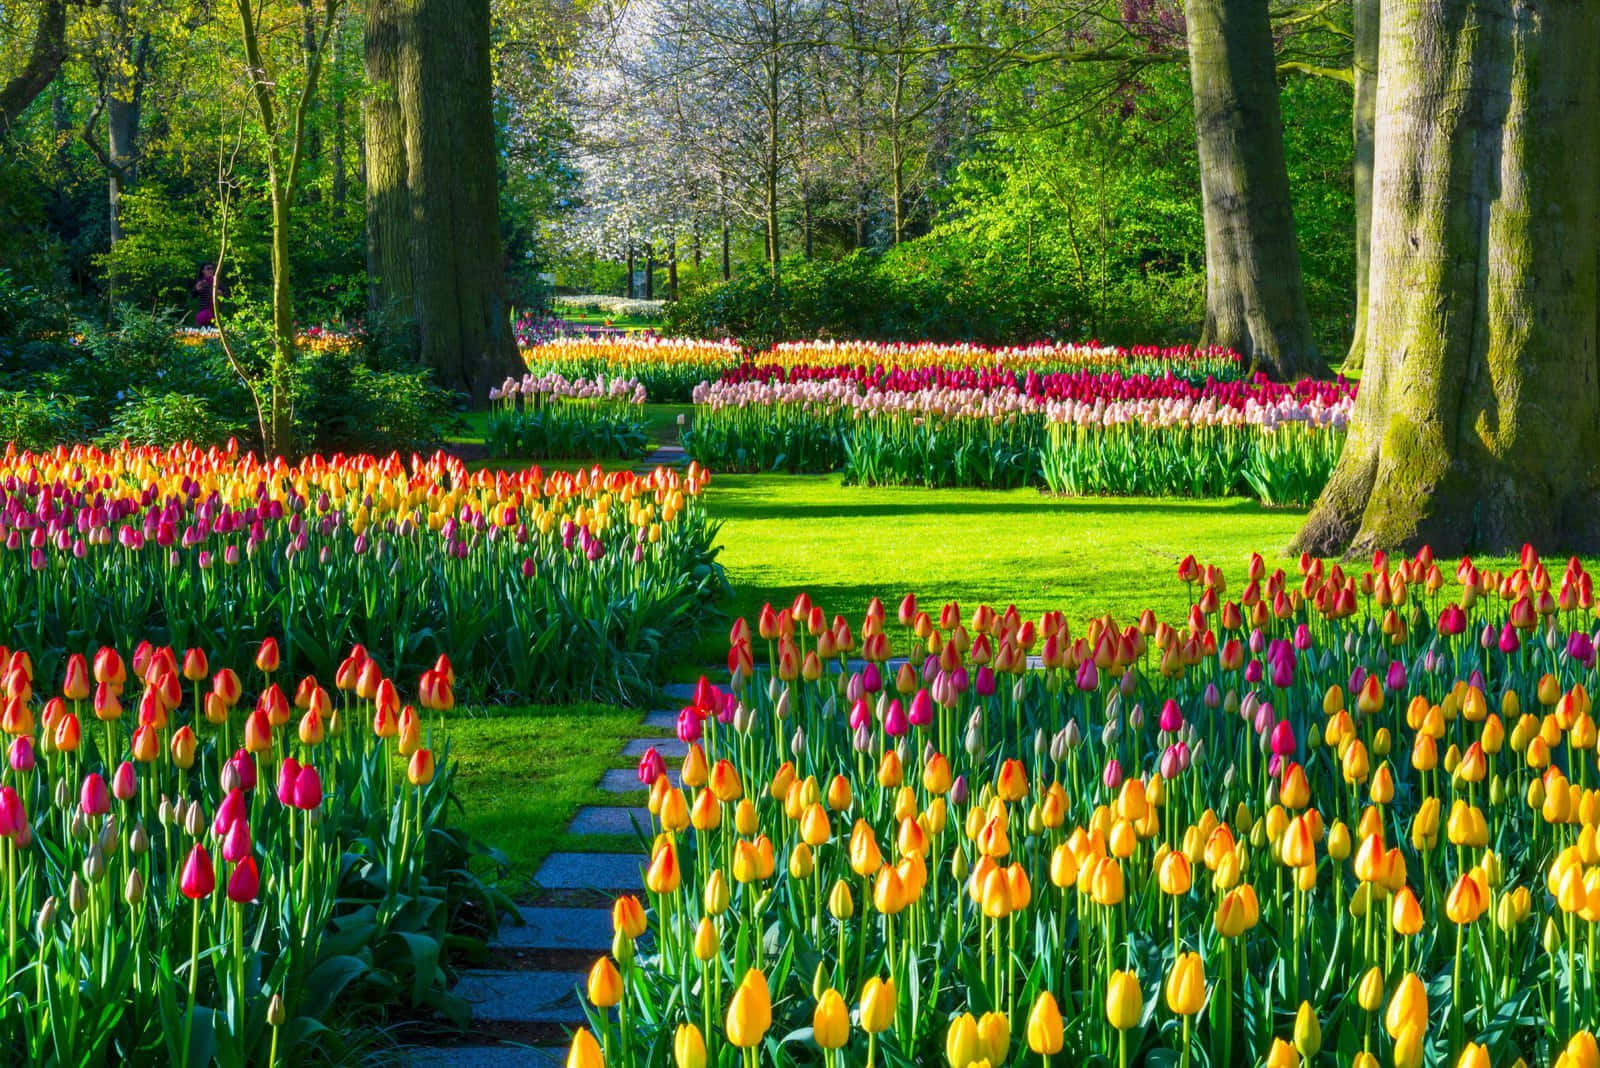 Related keywords: bloom, tulip, orange, flower, petals, green, sunlight, nature, garden